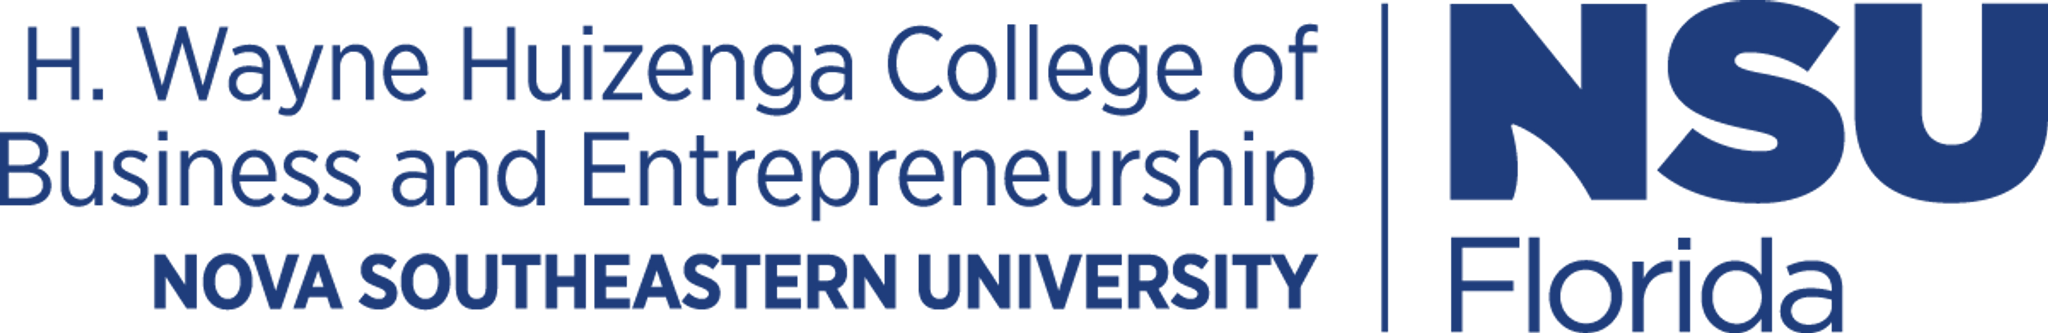 H. Wayne Huizenga College of Business and Entrepreneurship Student Publications